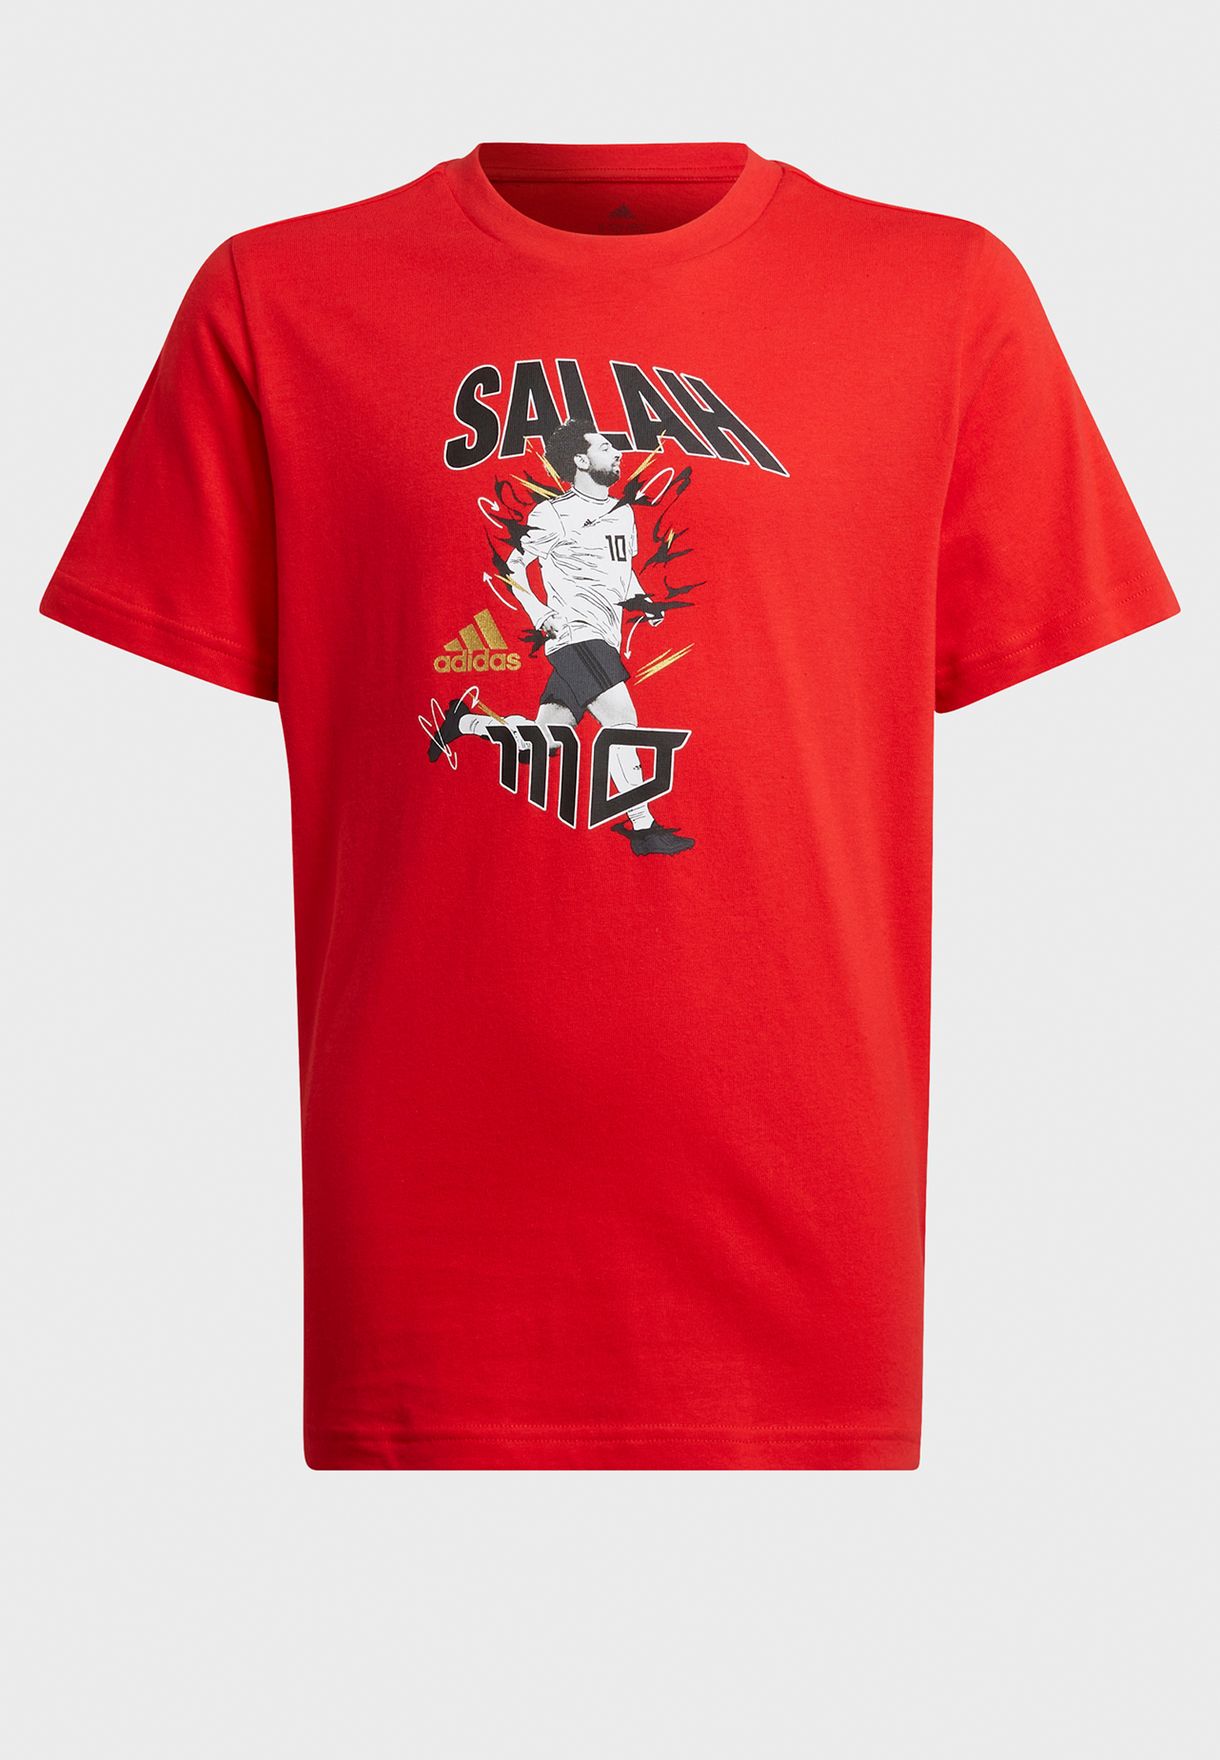 Youth Salah T-Shirt